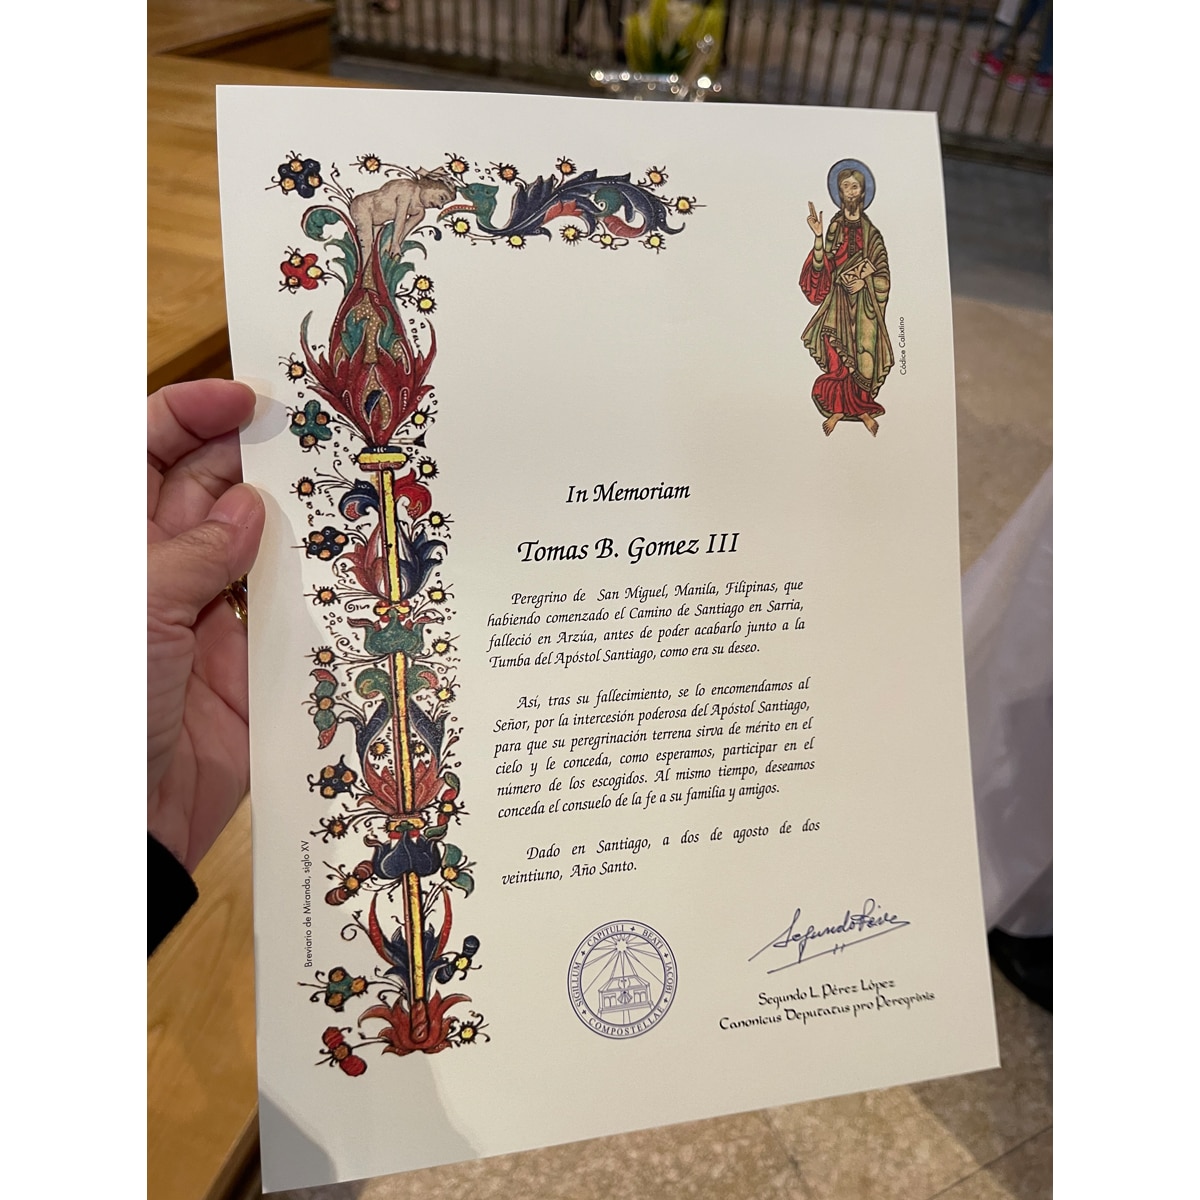 The late Buddy Gomez's Compostela Certificate. Photo courtesy of Karen Gomez-Dumpit